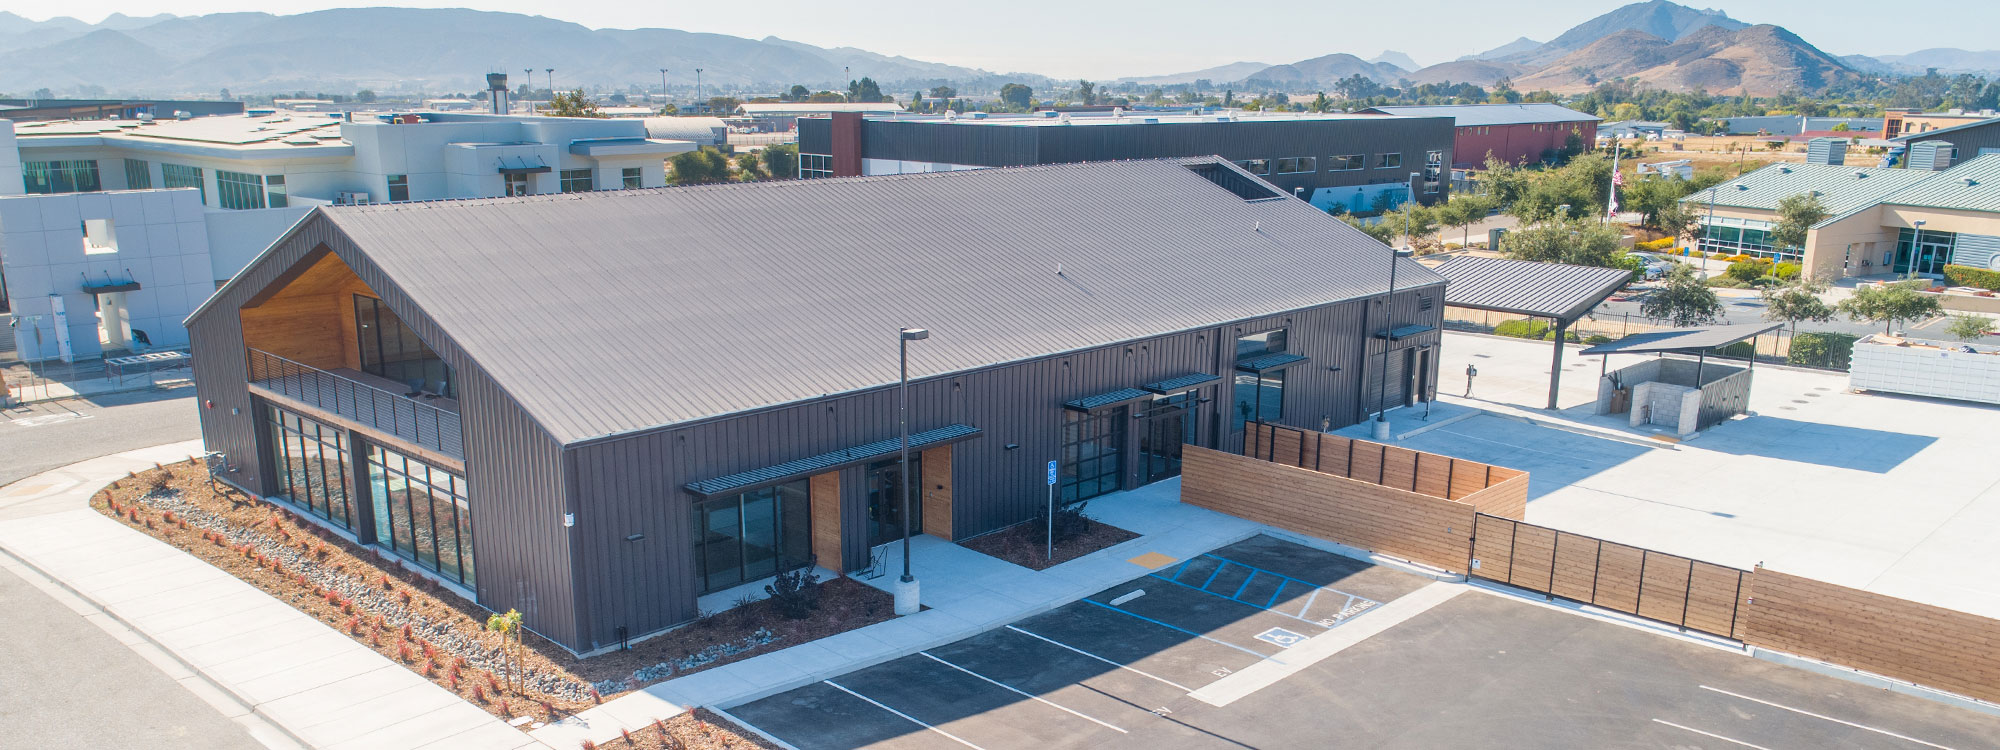 The Kitchen Terminal - San Luis Obispo, California Contractor and Builder - Commercial Kitchen Space Builder - JW Design & Construction